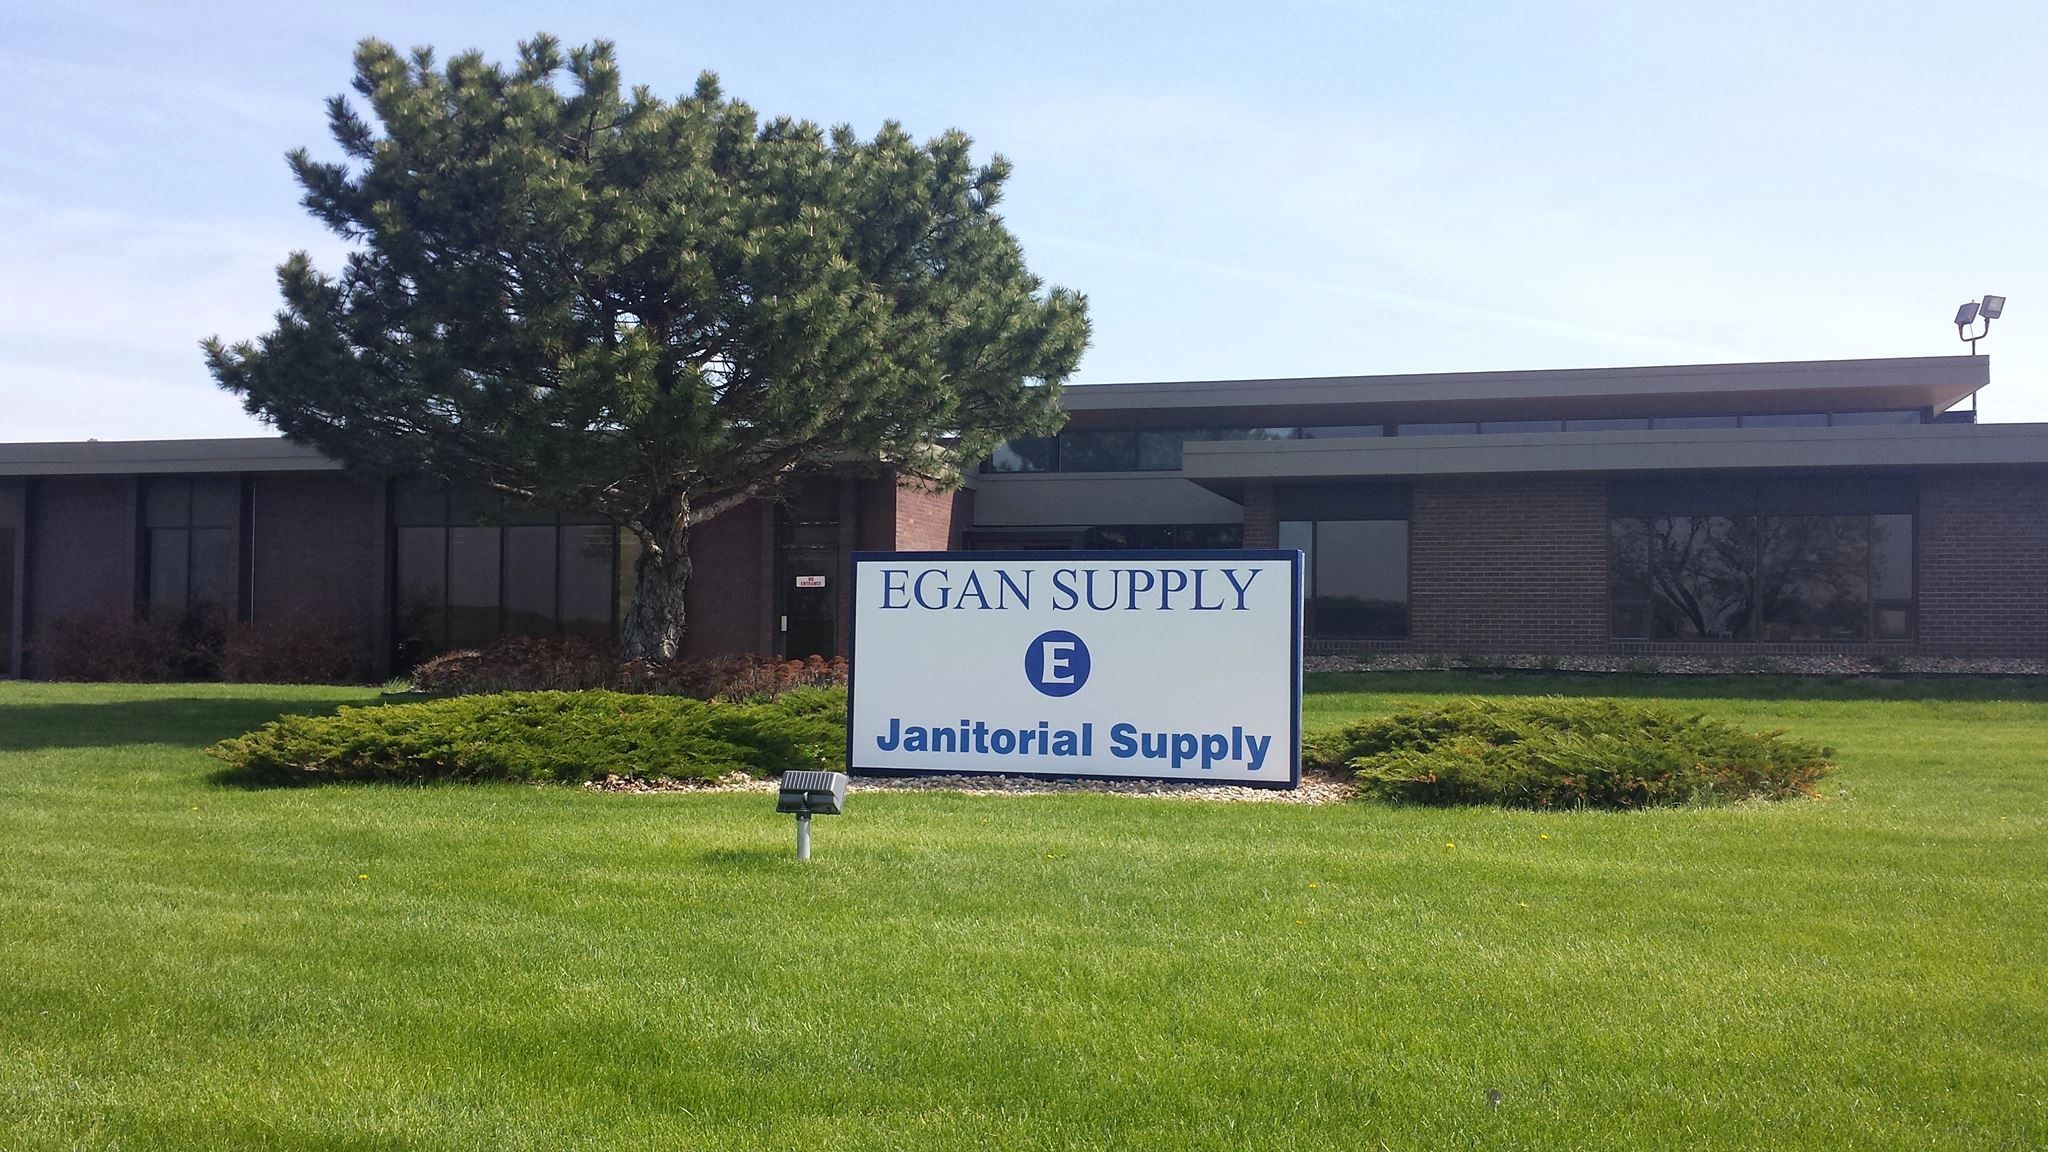 Egan Supply Co